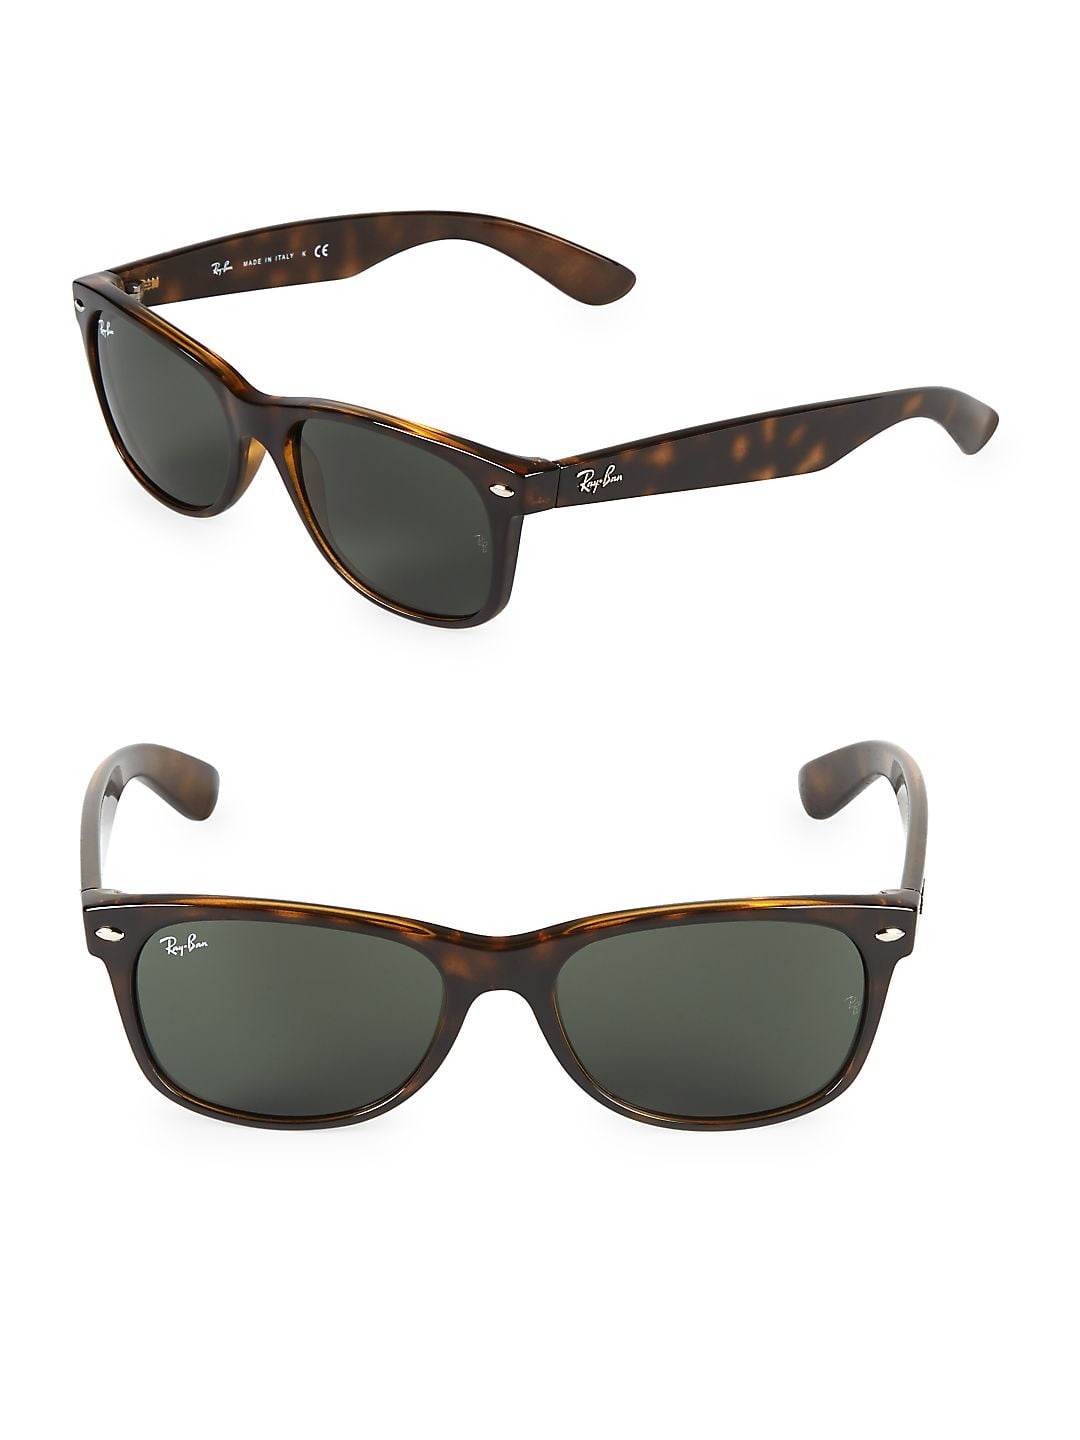 Rb2132 55mm New Wayfarer Sunglasses Walmart Com